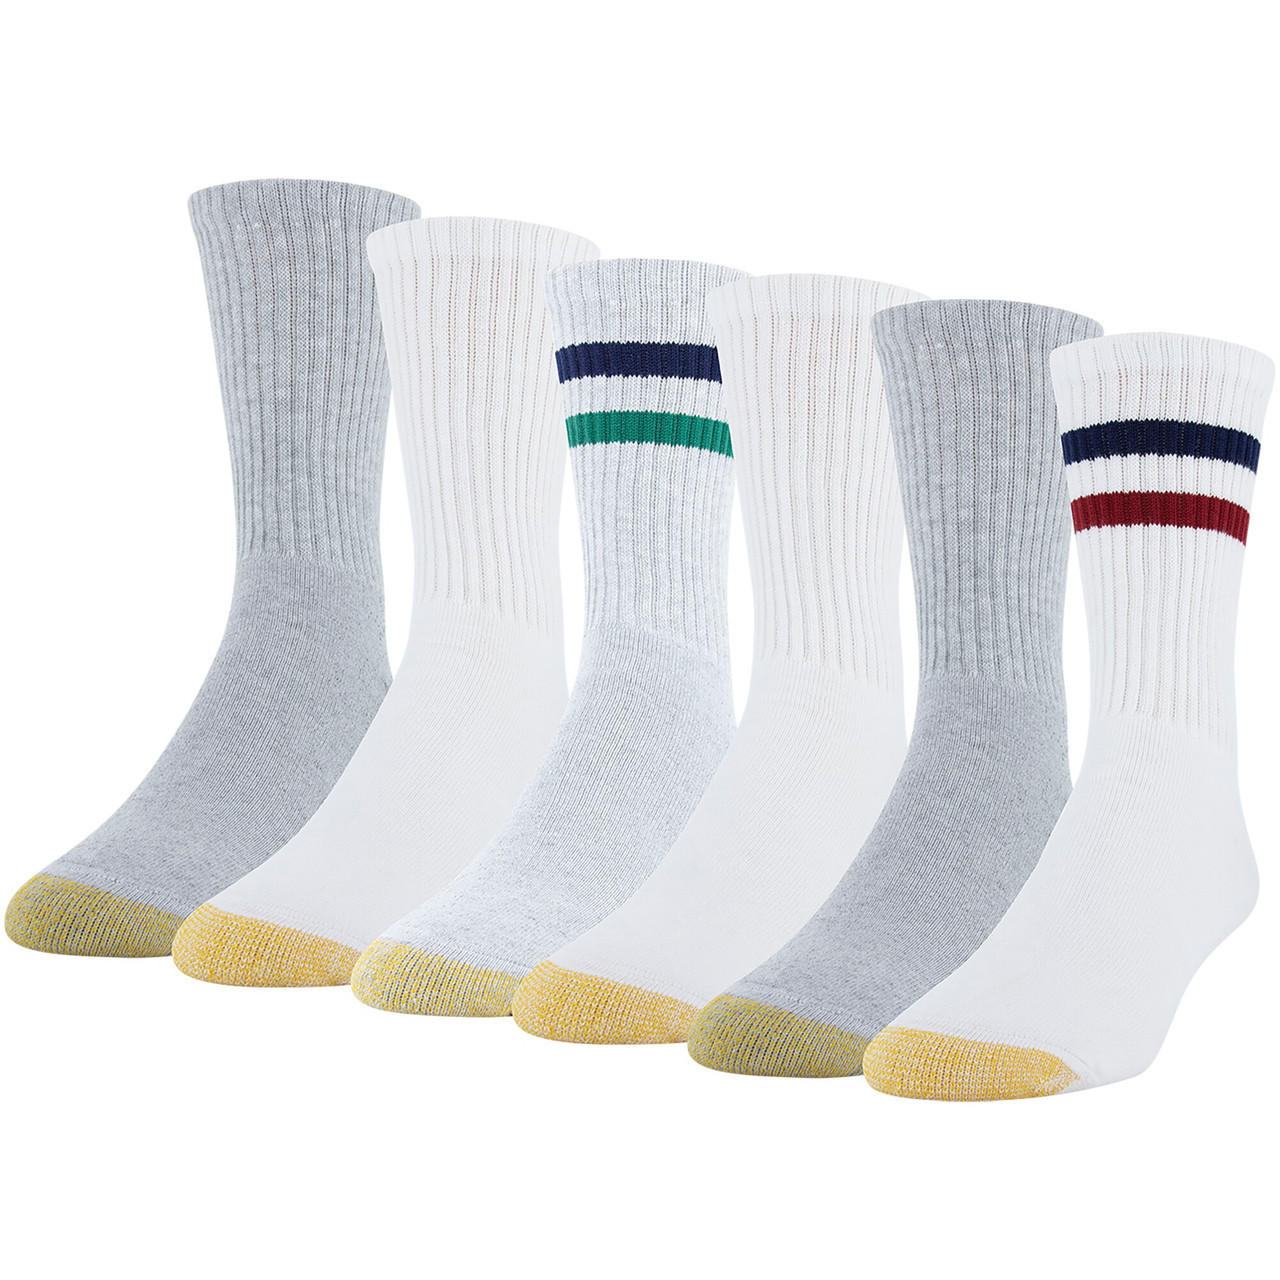 Men's Cotton Short Crew Athletic Sock